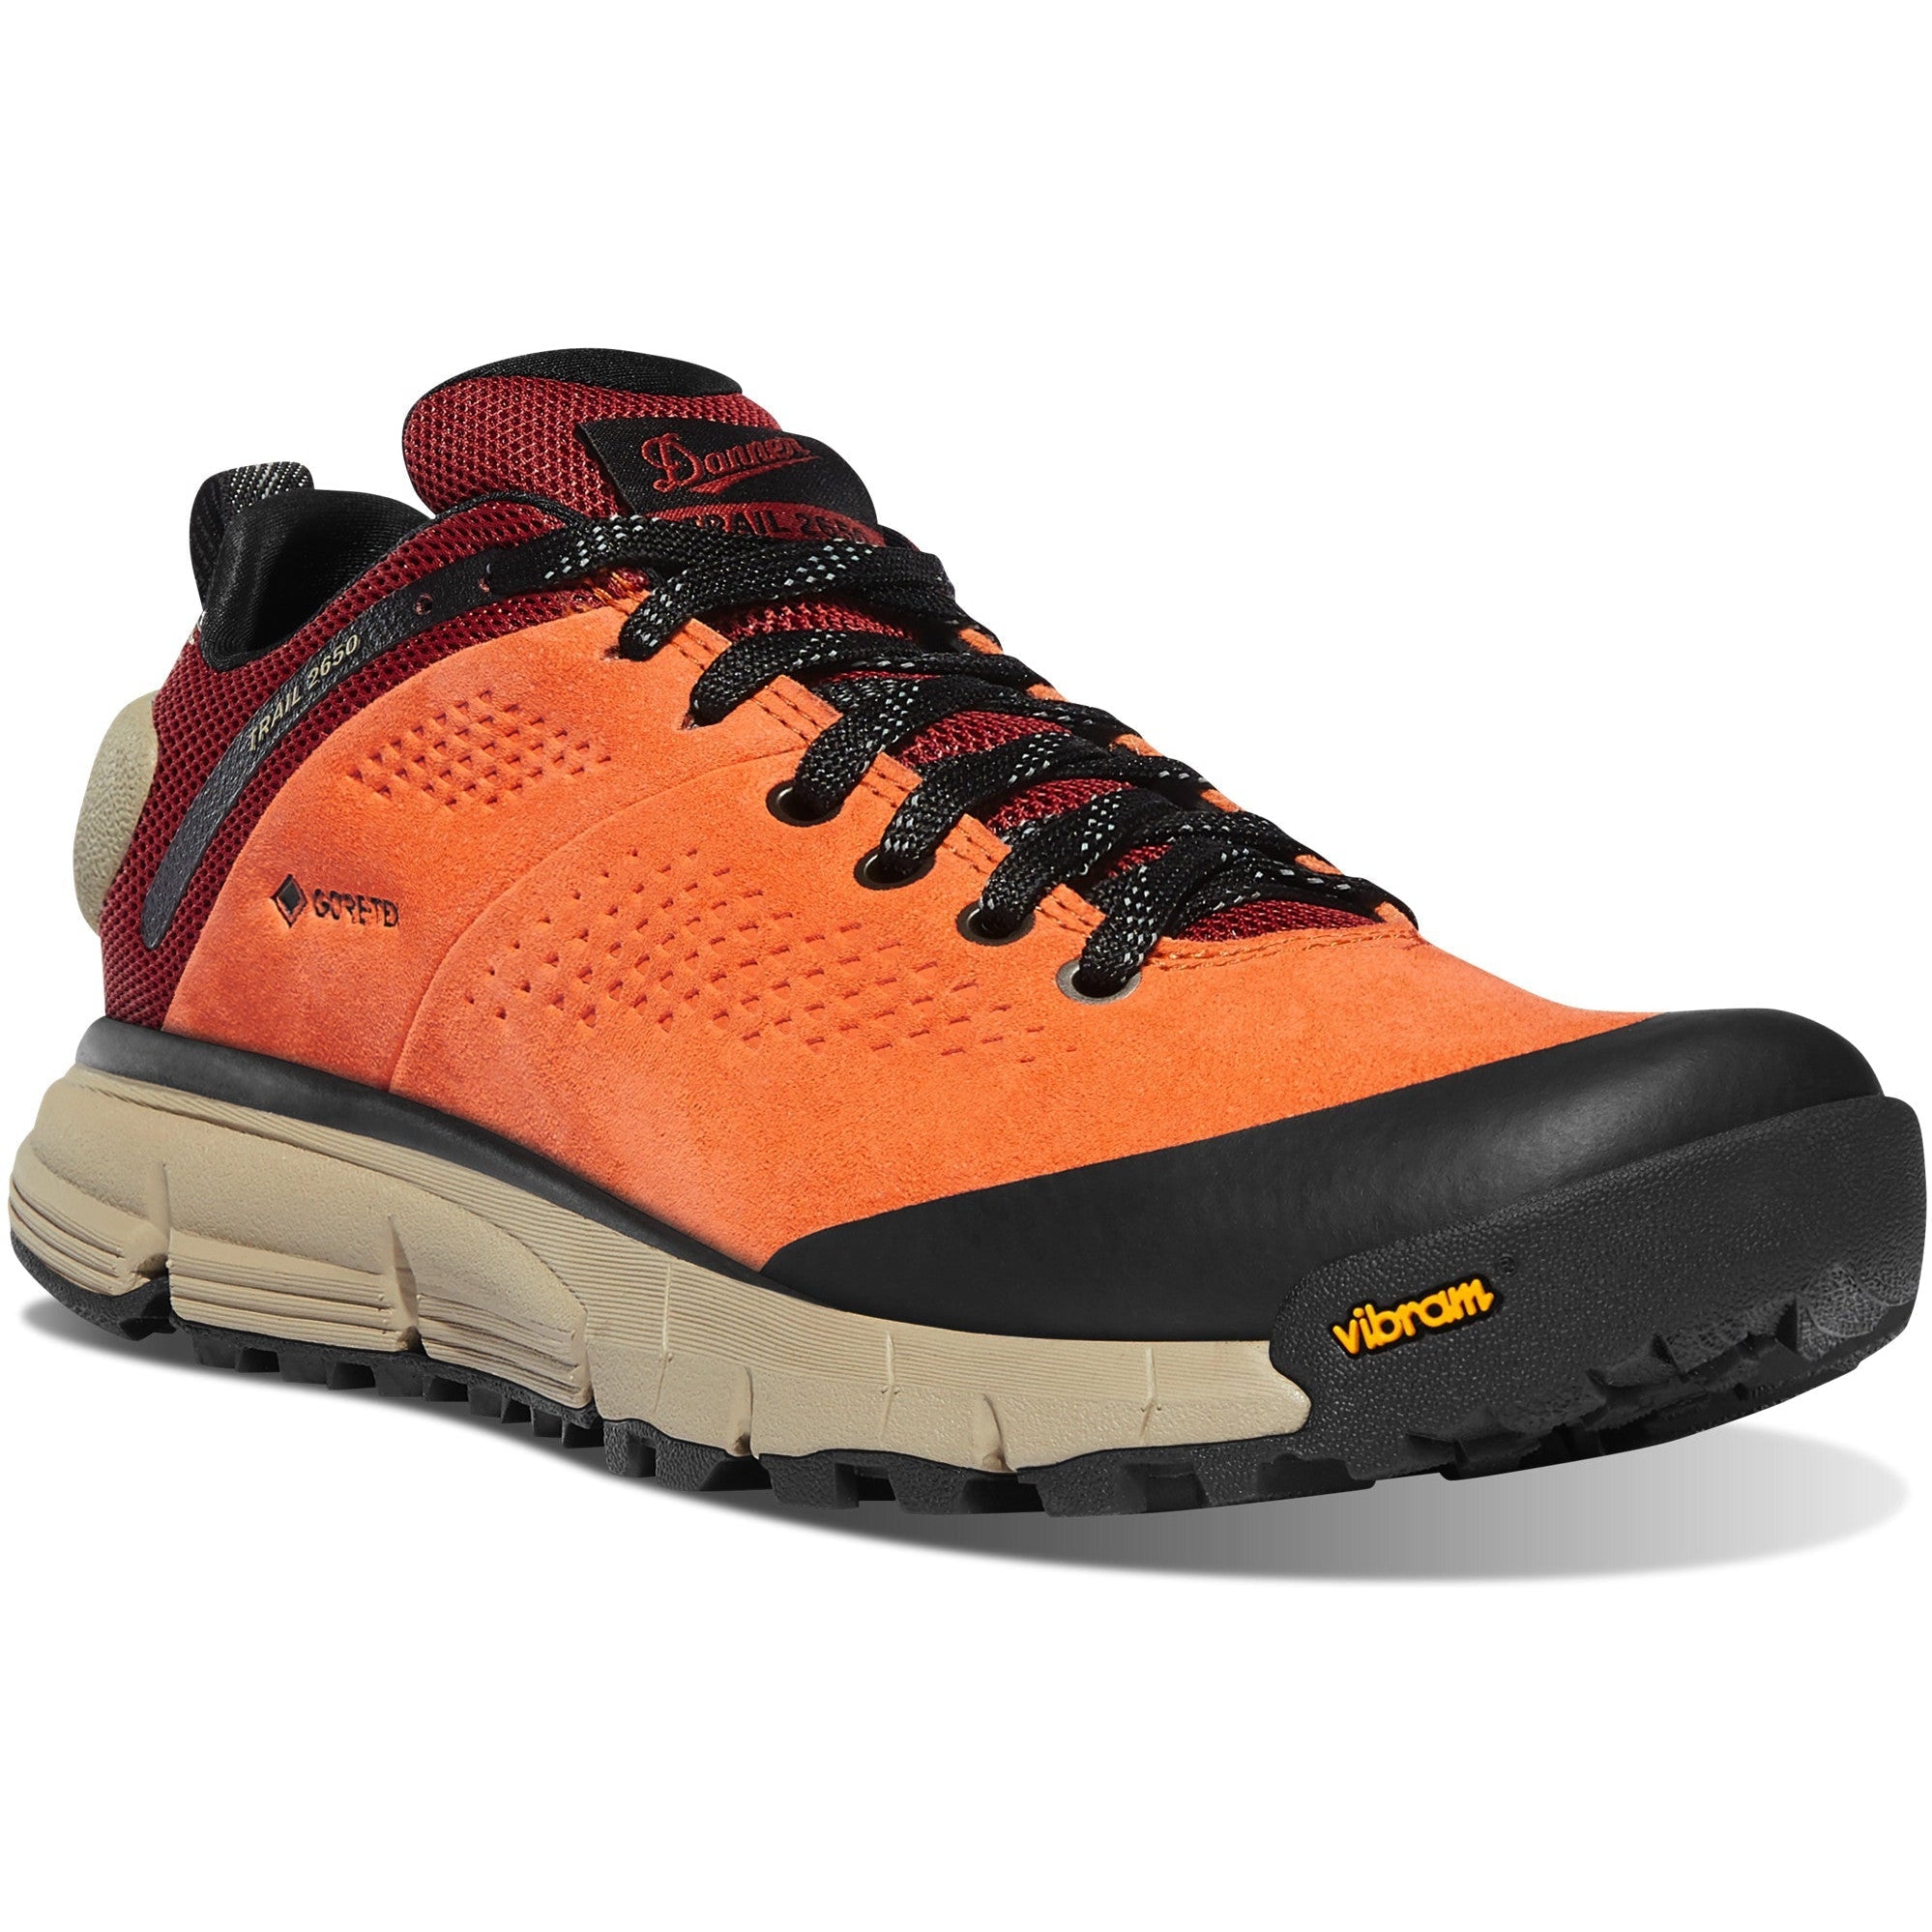 Danner Women's Trail 2650 GTX 3" WP Hiker Shoe - Tangerine - 61289 5 / Medium / Organge - Overlook Boots